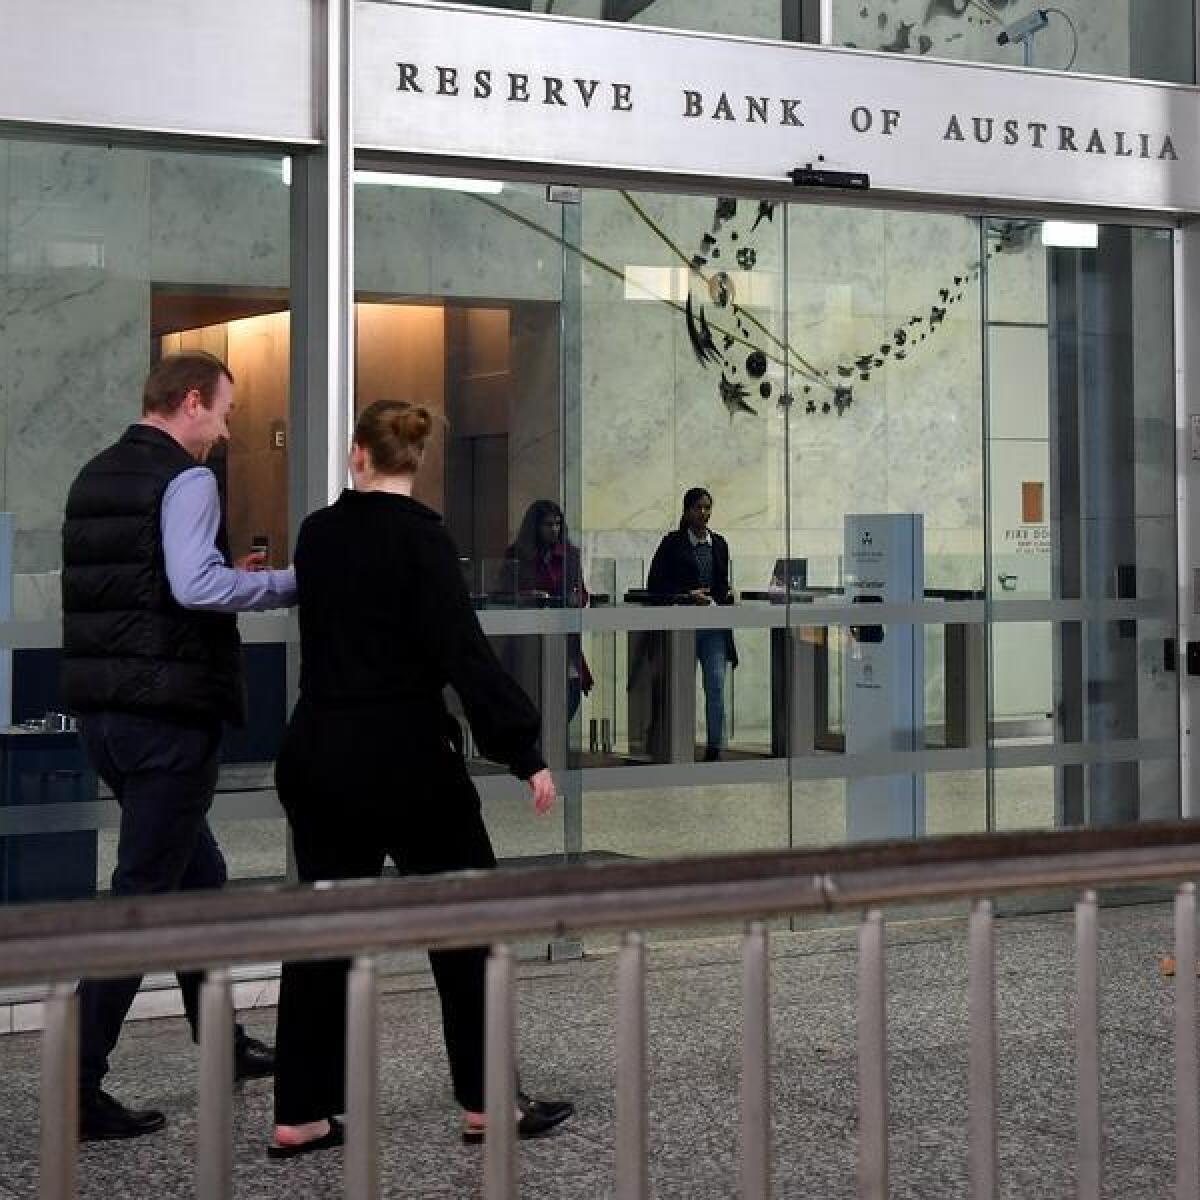 The Reserve Bank of Australia headquarters.